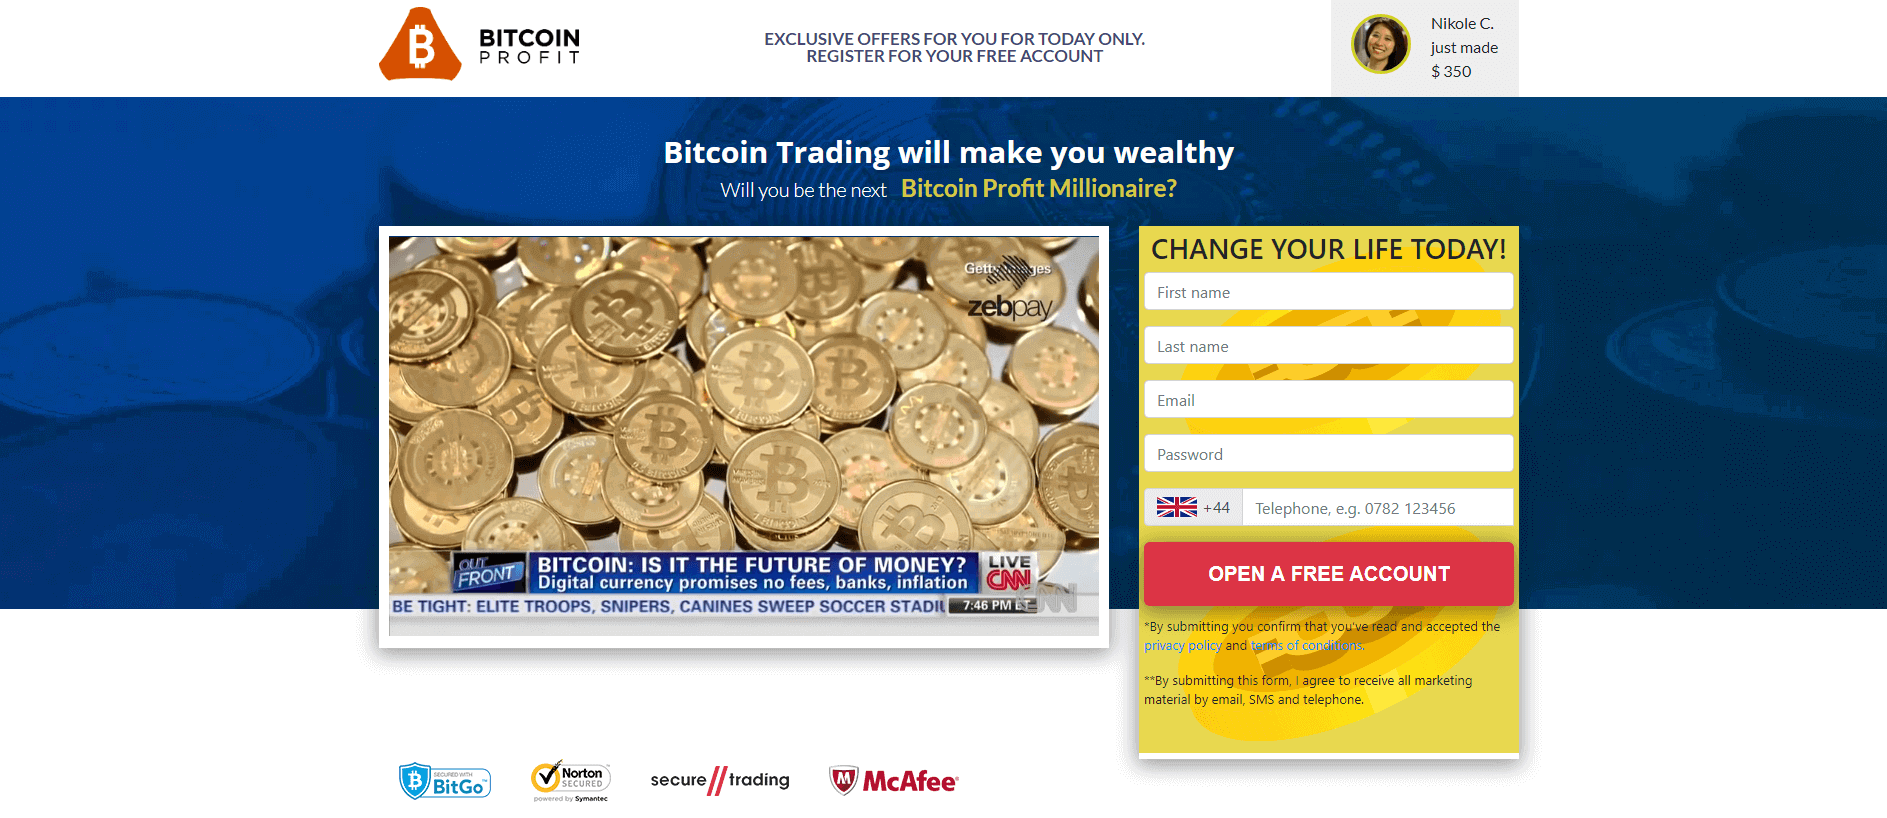 bitcoin profit this morning)